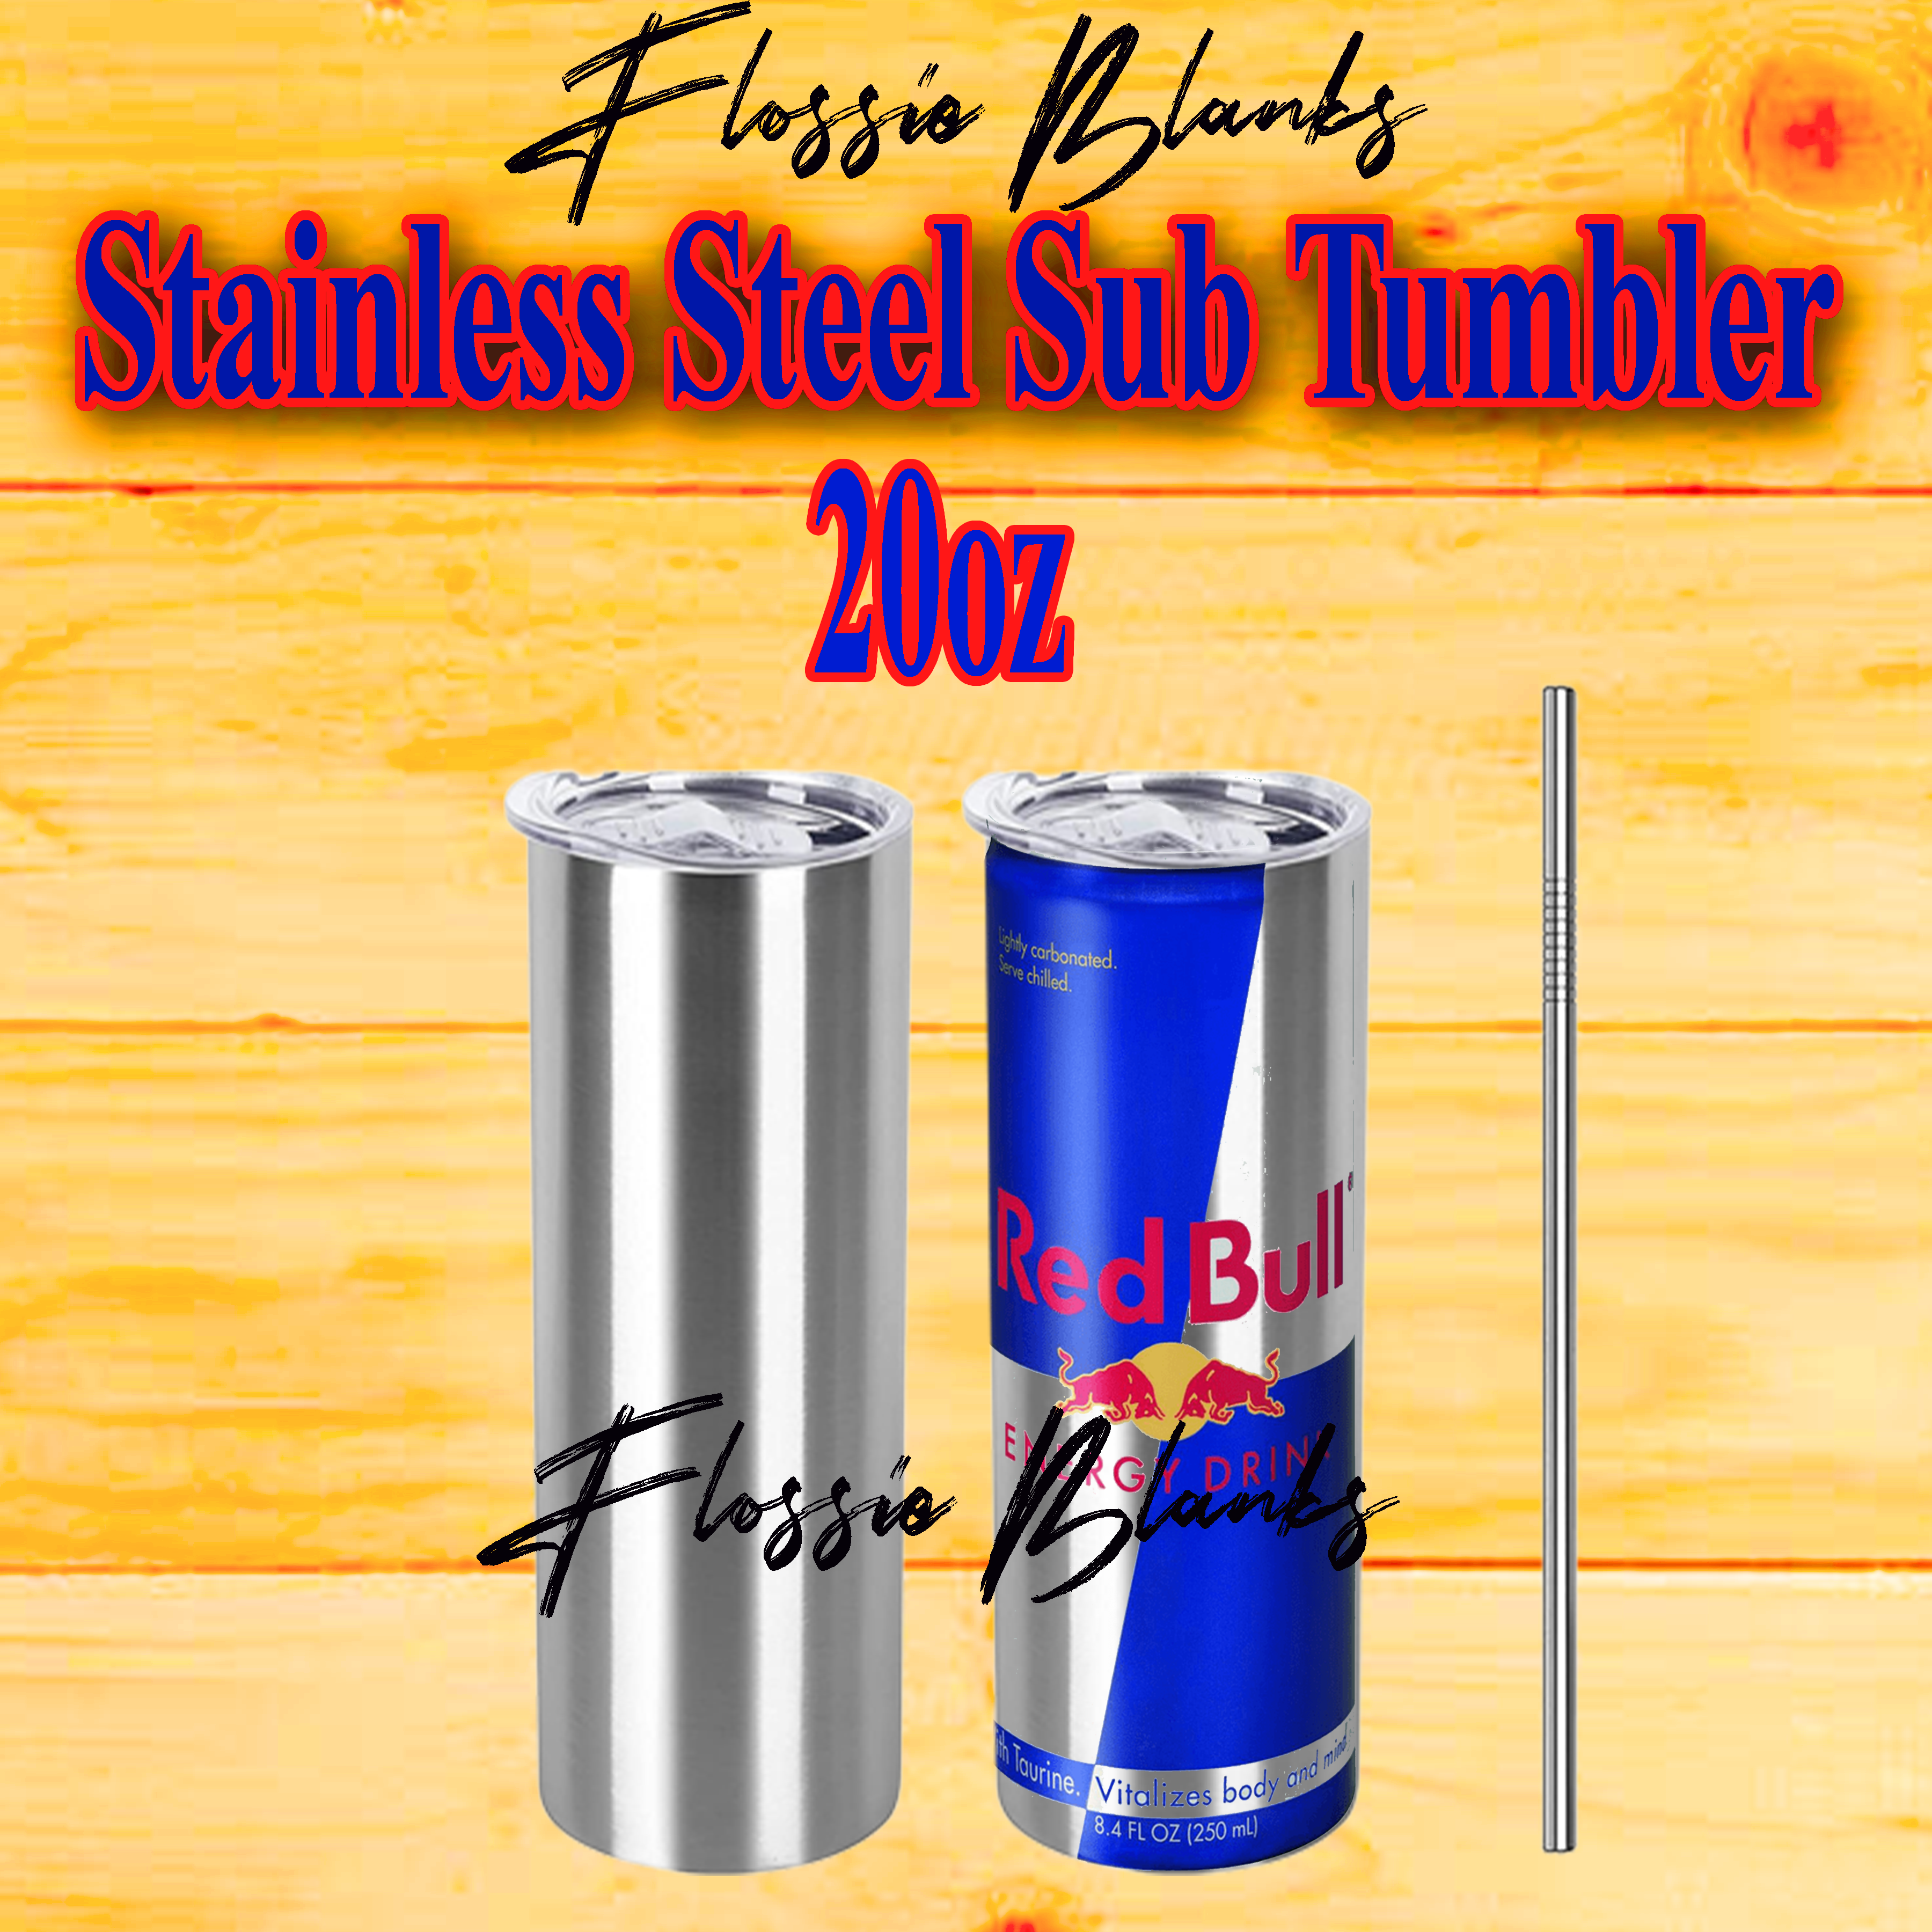 Stainless Steel Tumbler 250 ml 8 oz